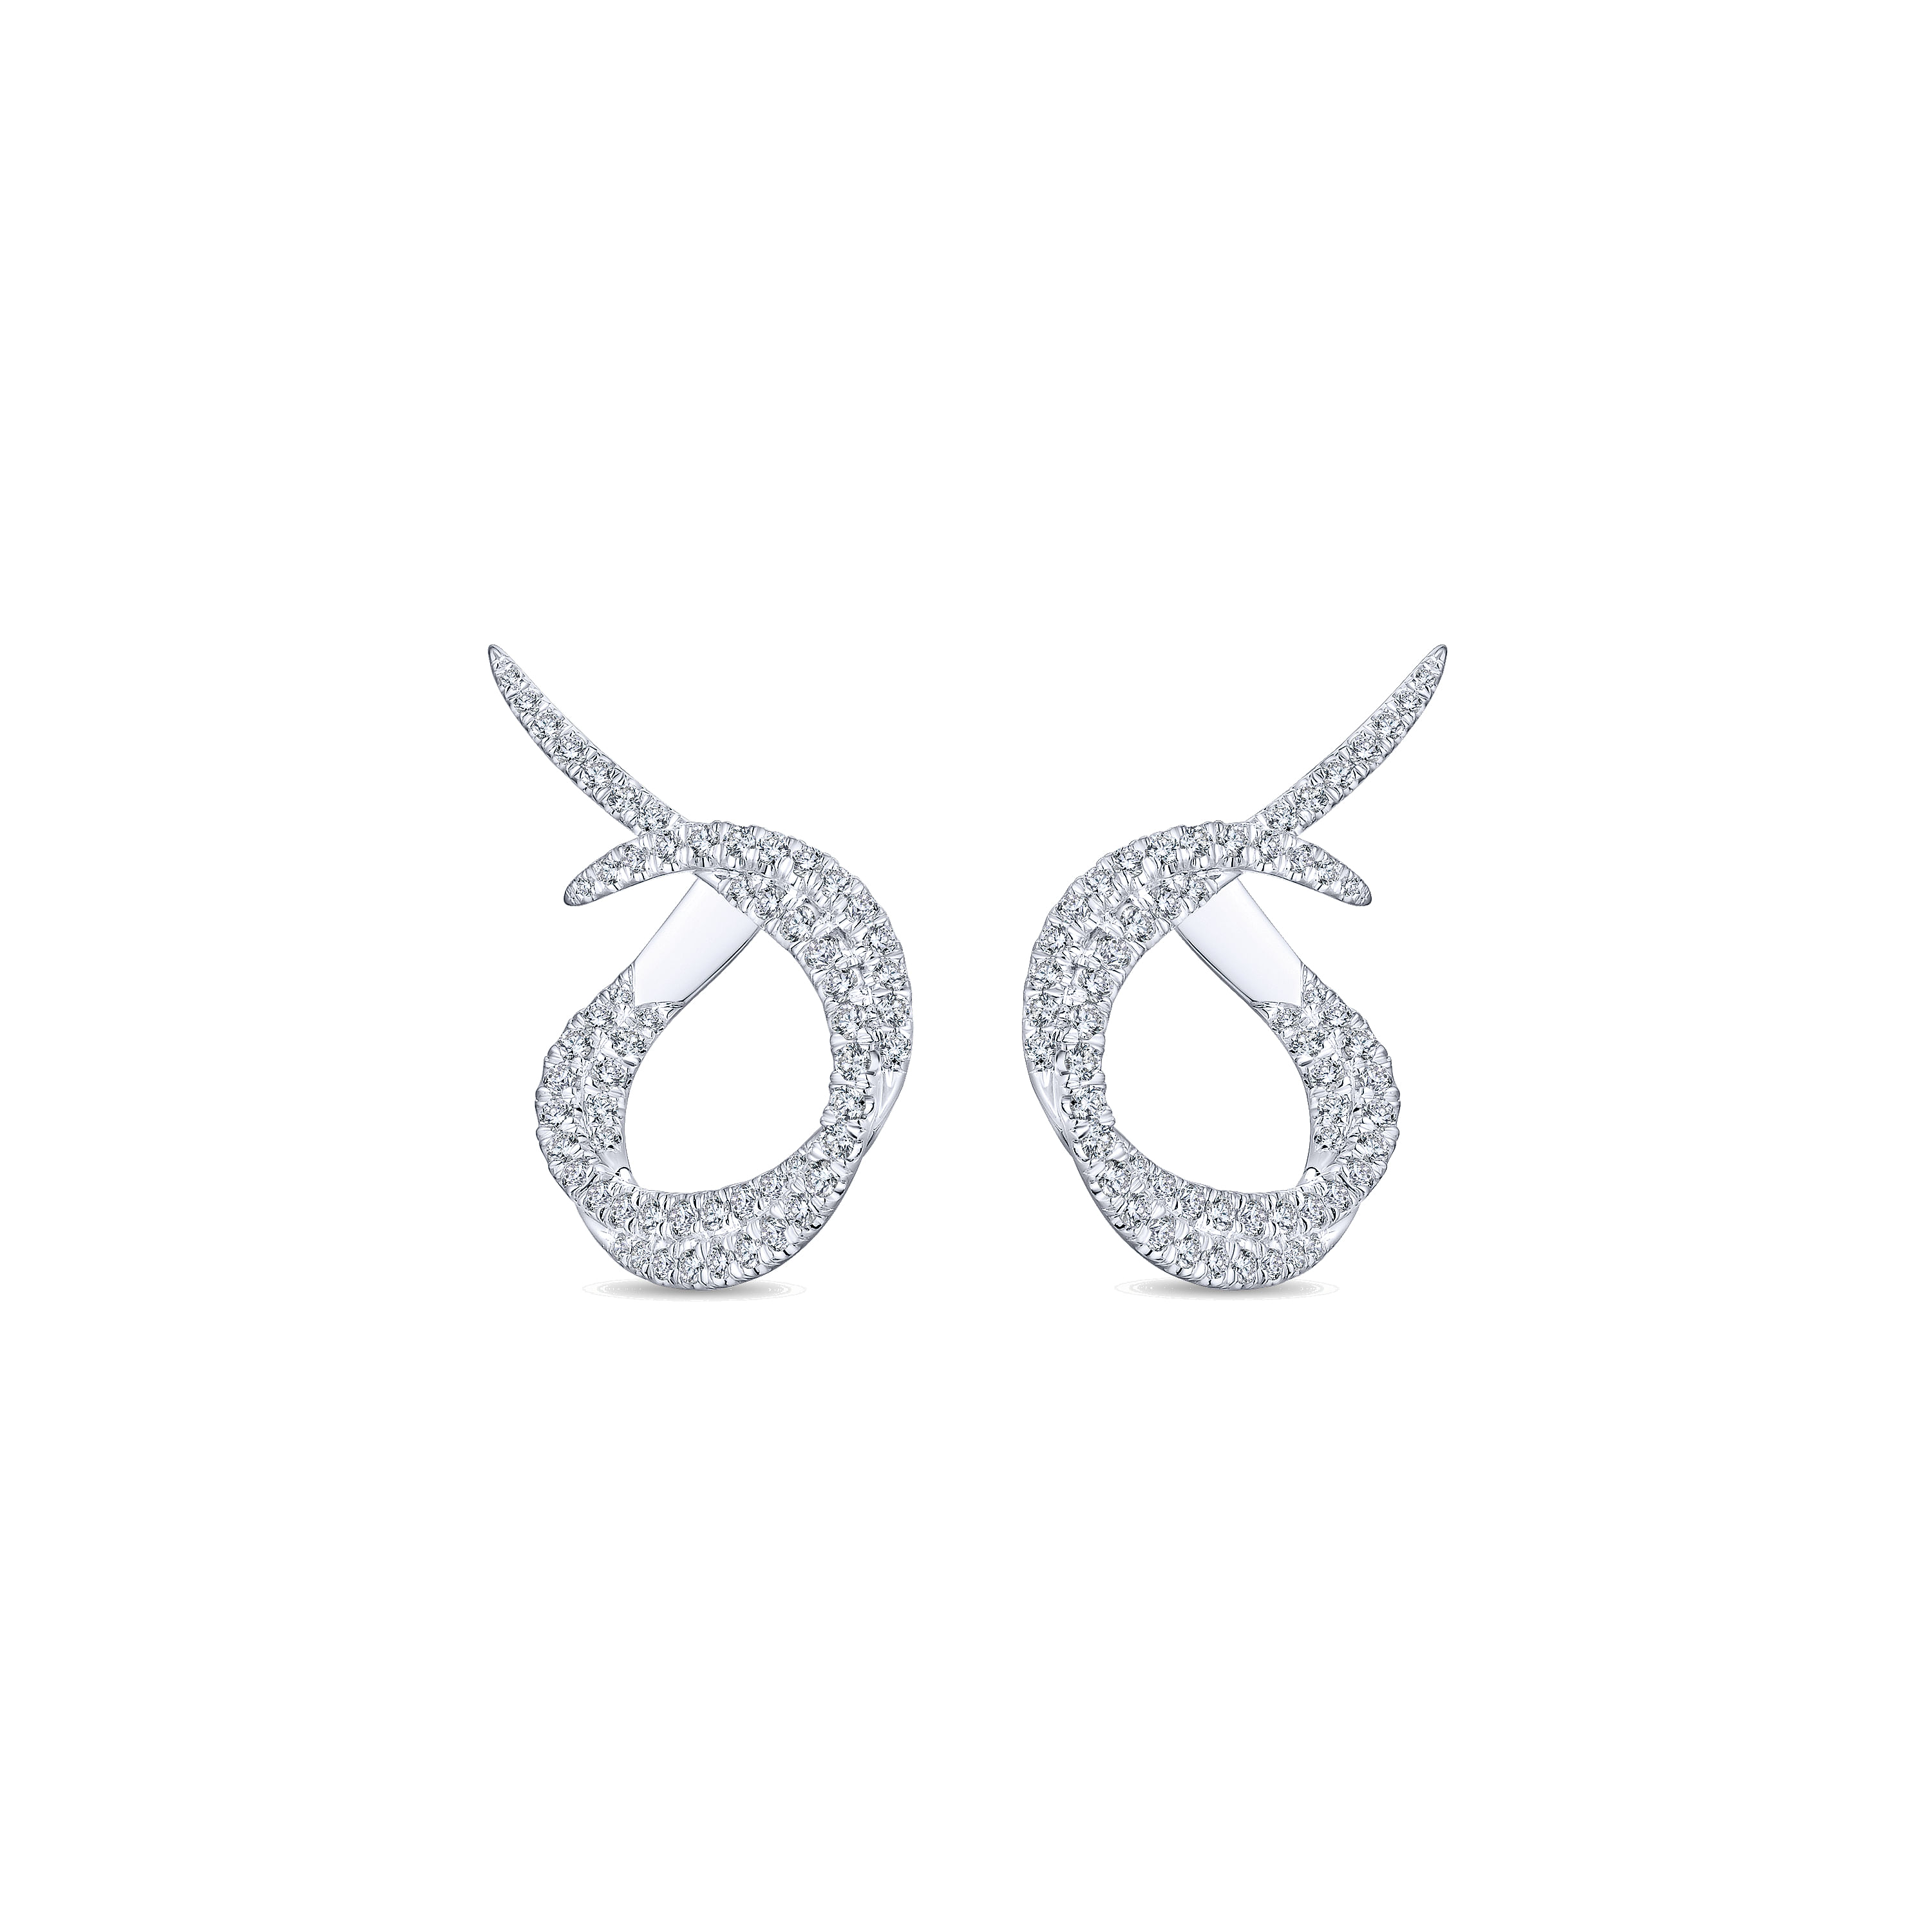 18K White Gold Intricate Twisted 25mm Diamond Hoop Earrings